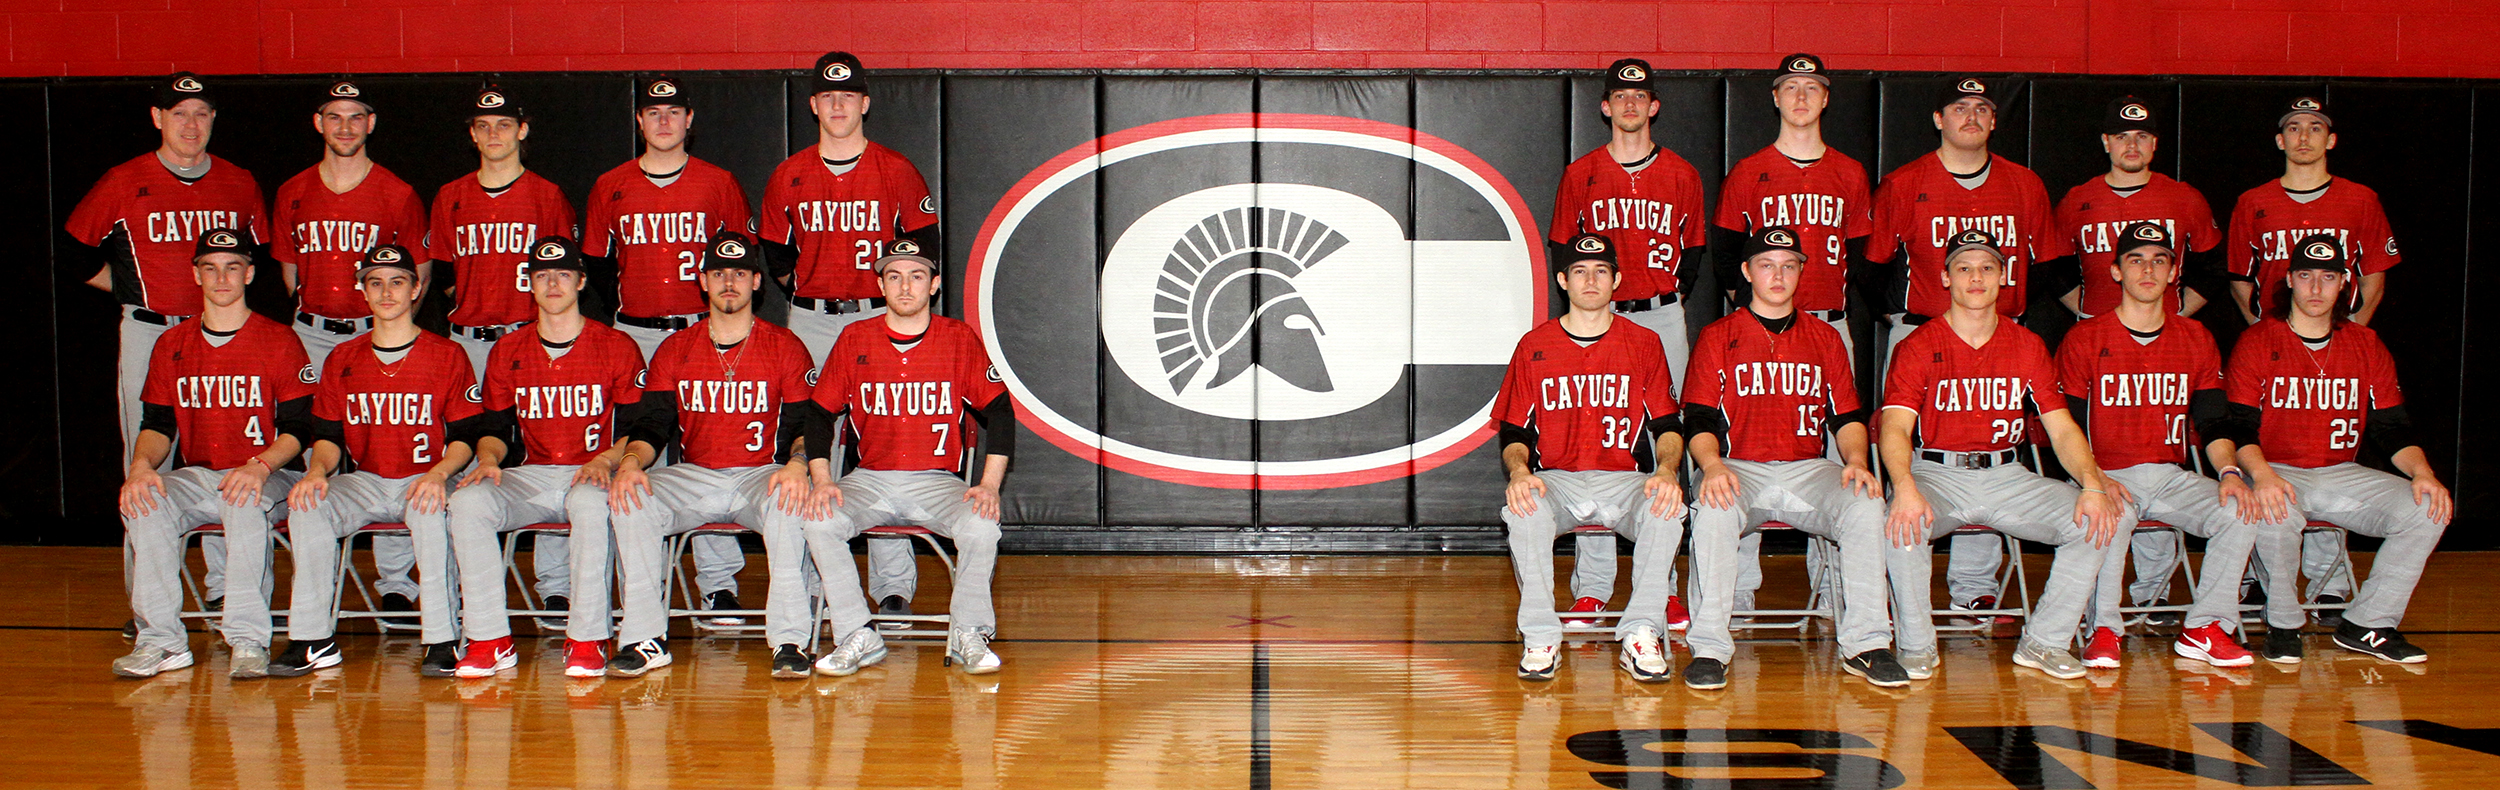 The Cayuga Community College 2019 Men's Baseball Team.